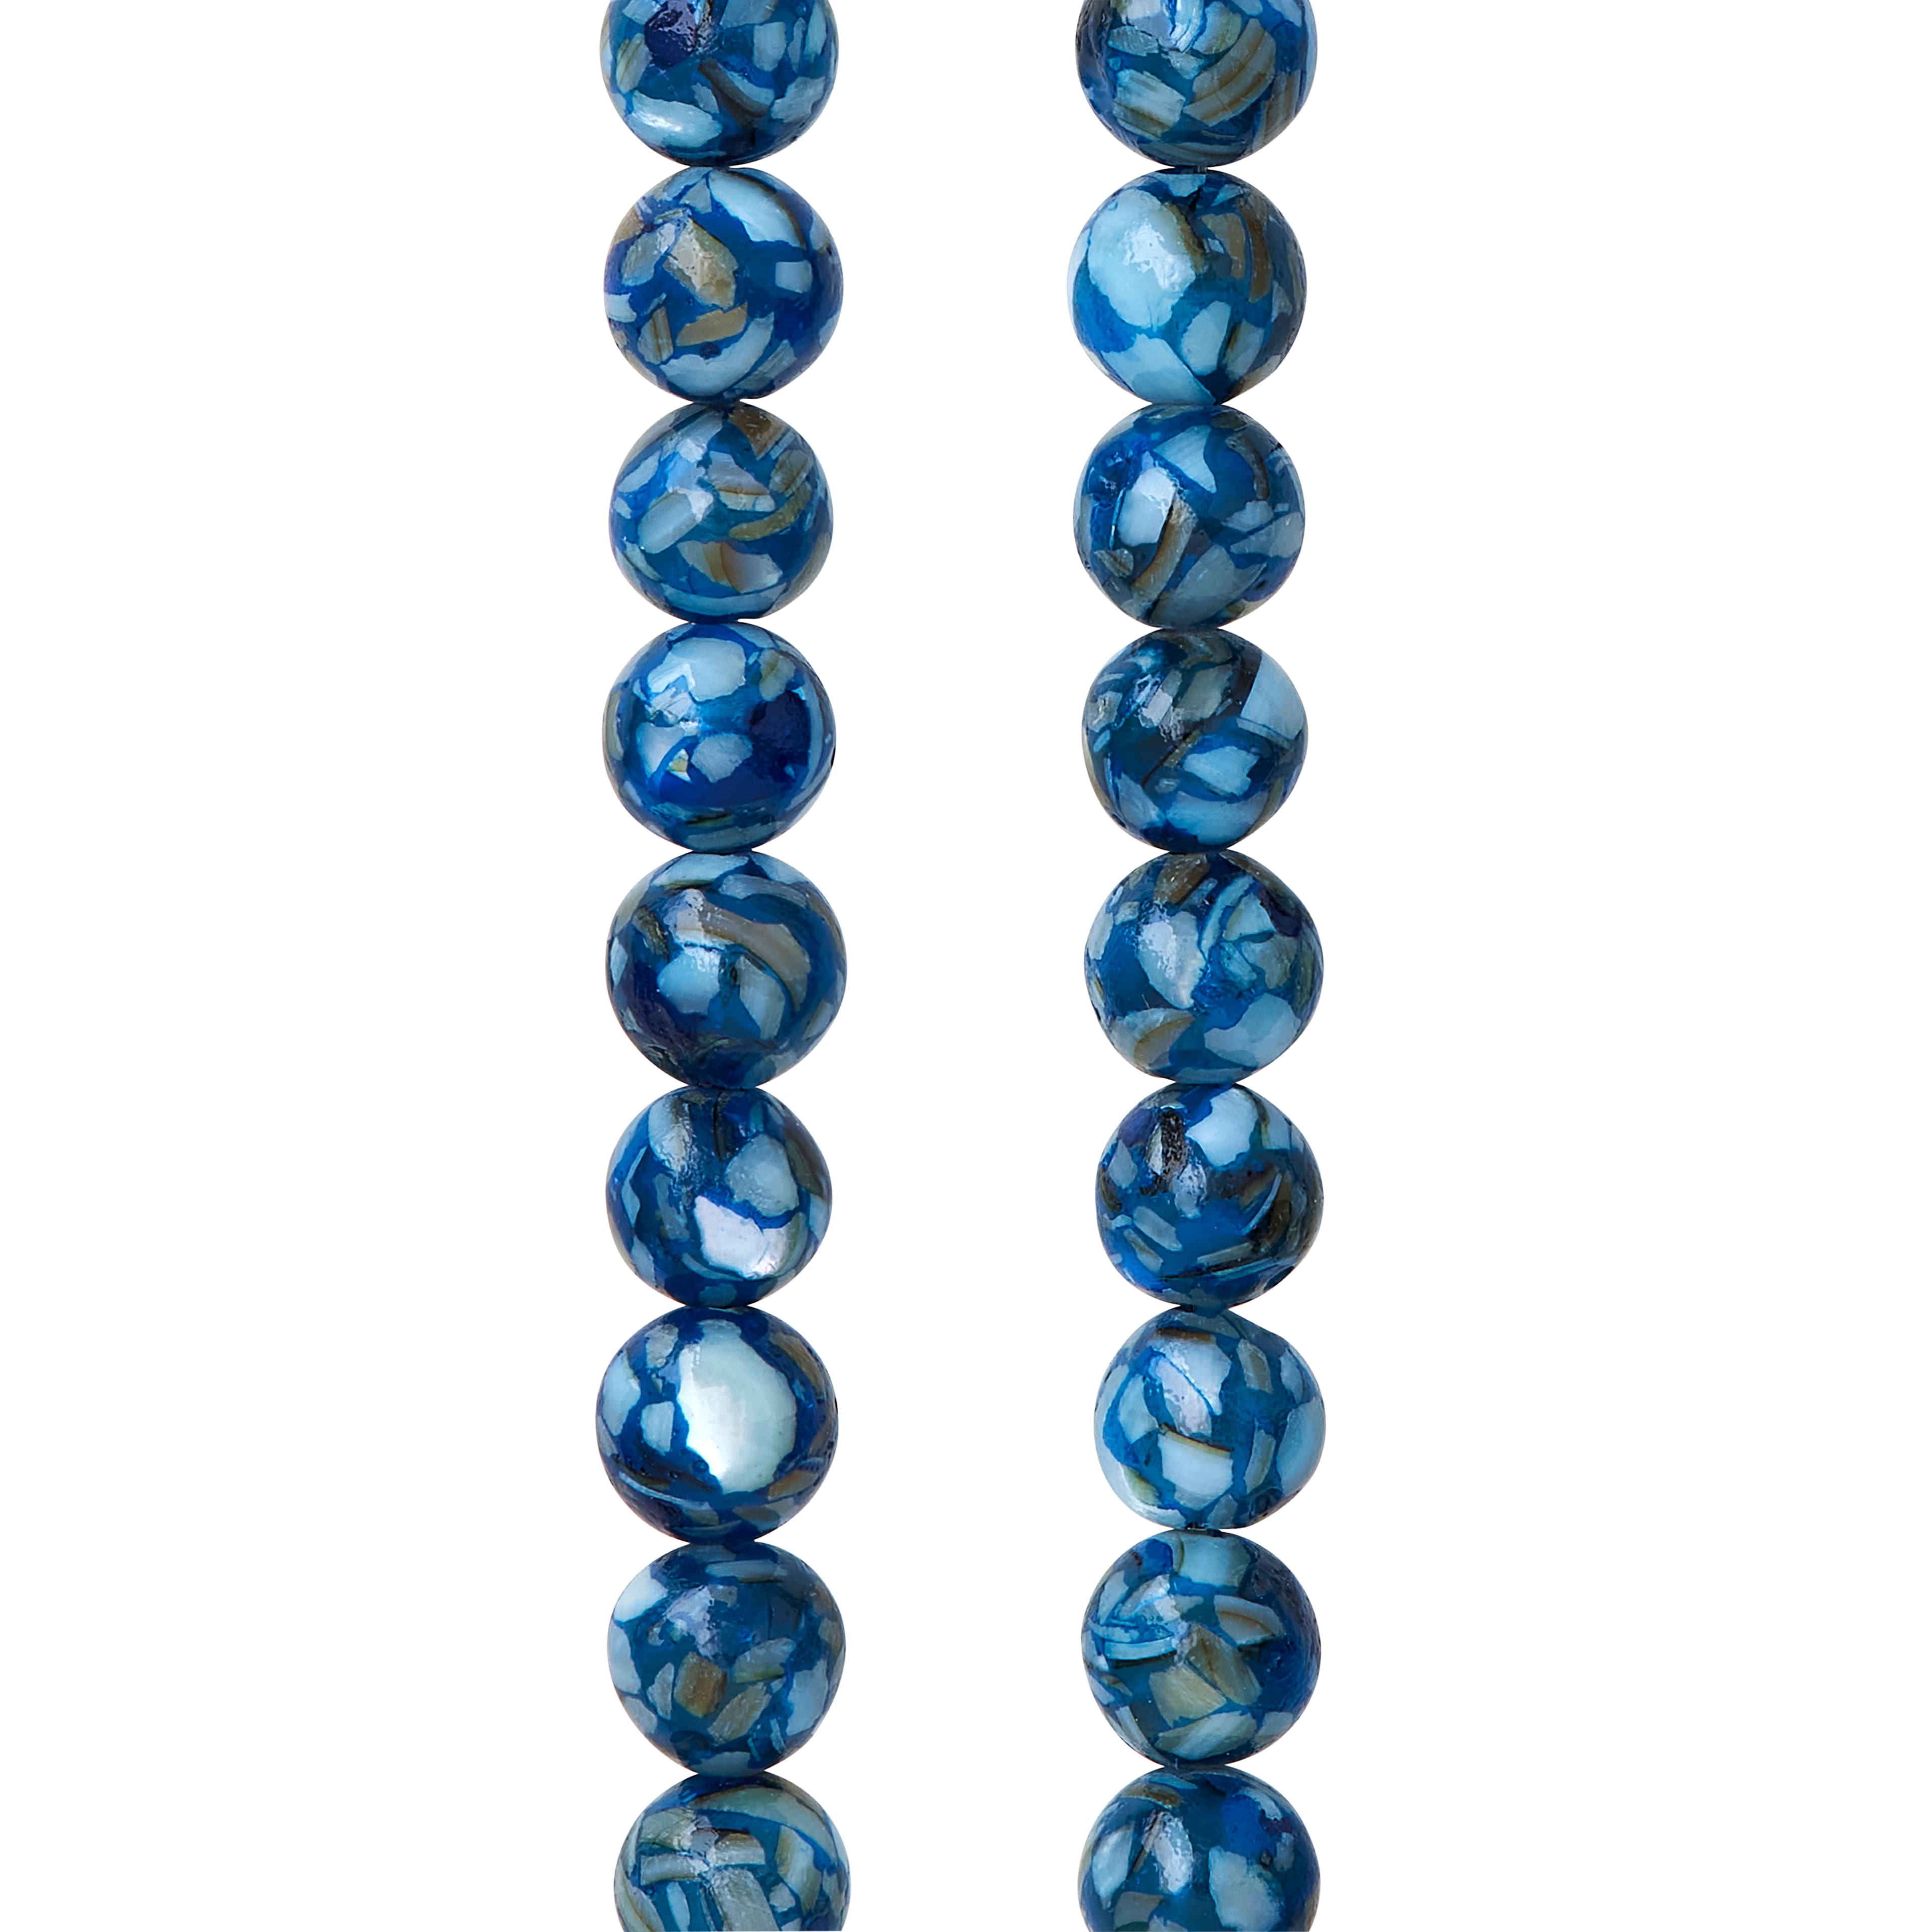 White Shell Teardrop Beads, 34mm by Bead Landing™